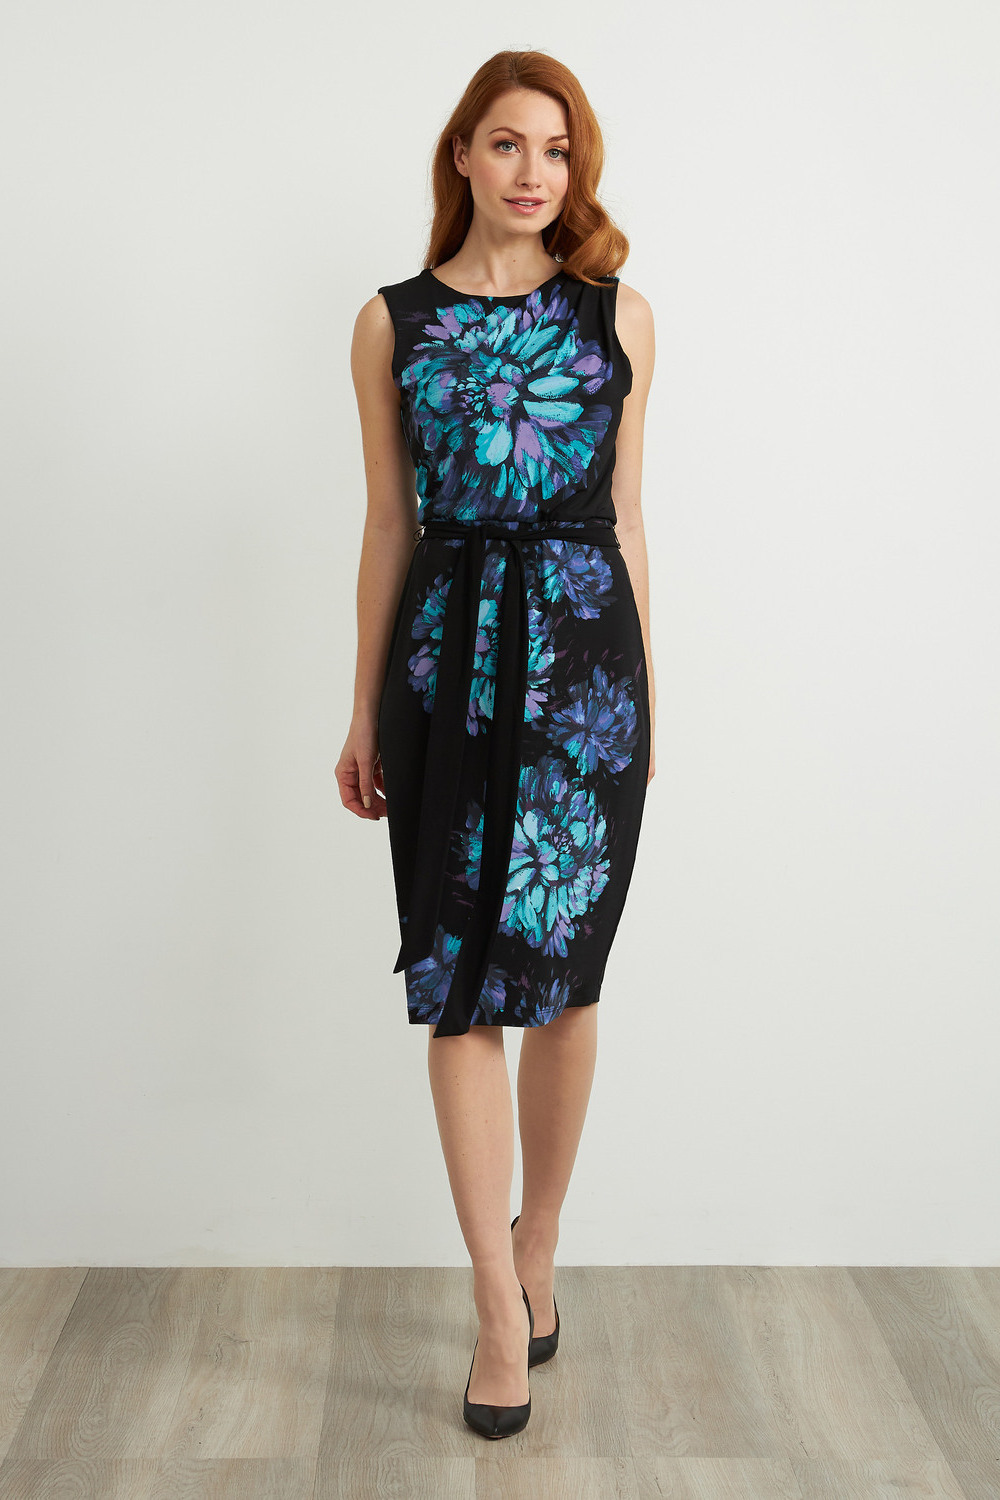 Joseph Ribkoff Sleeveless Floral Dress Style 211220. Black/multi